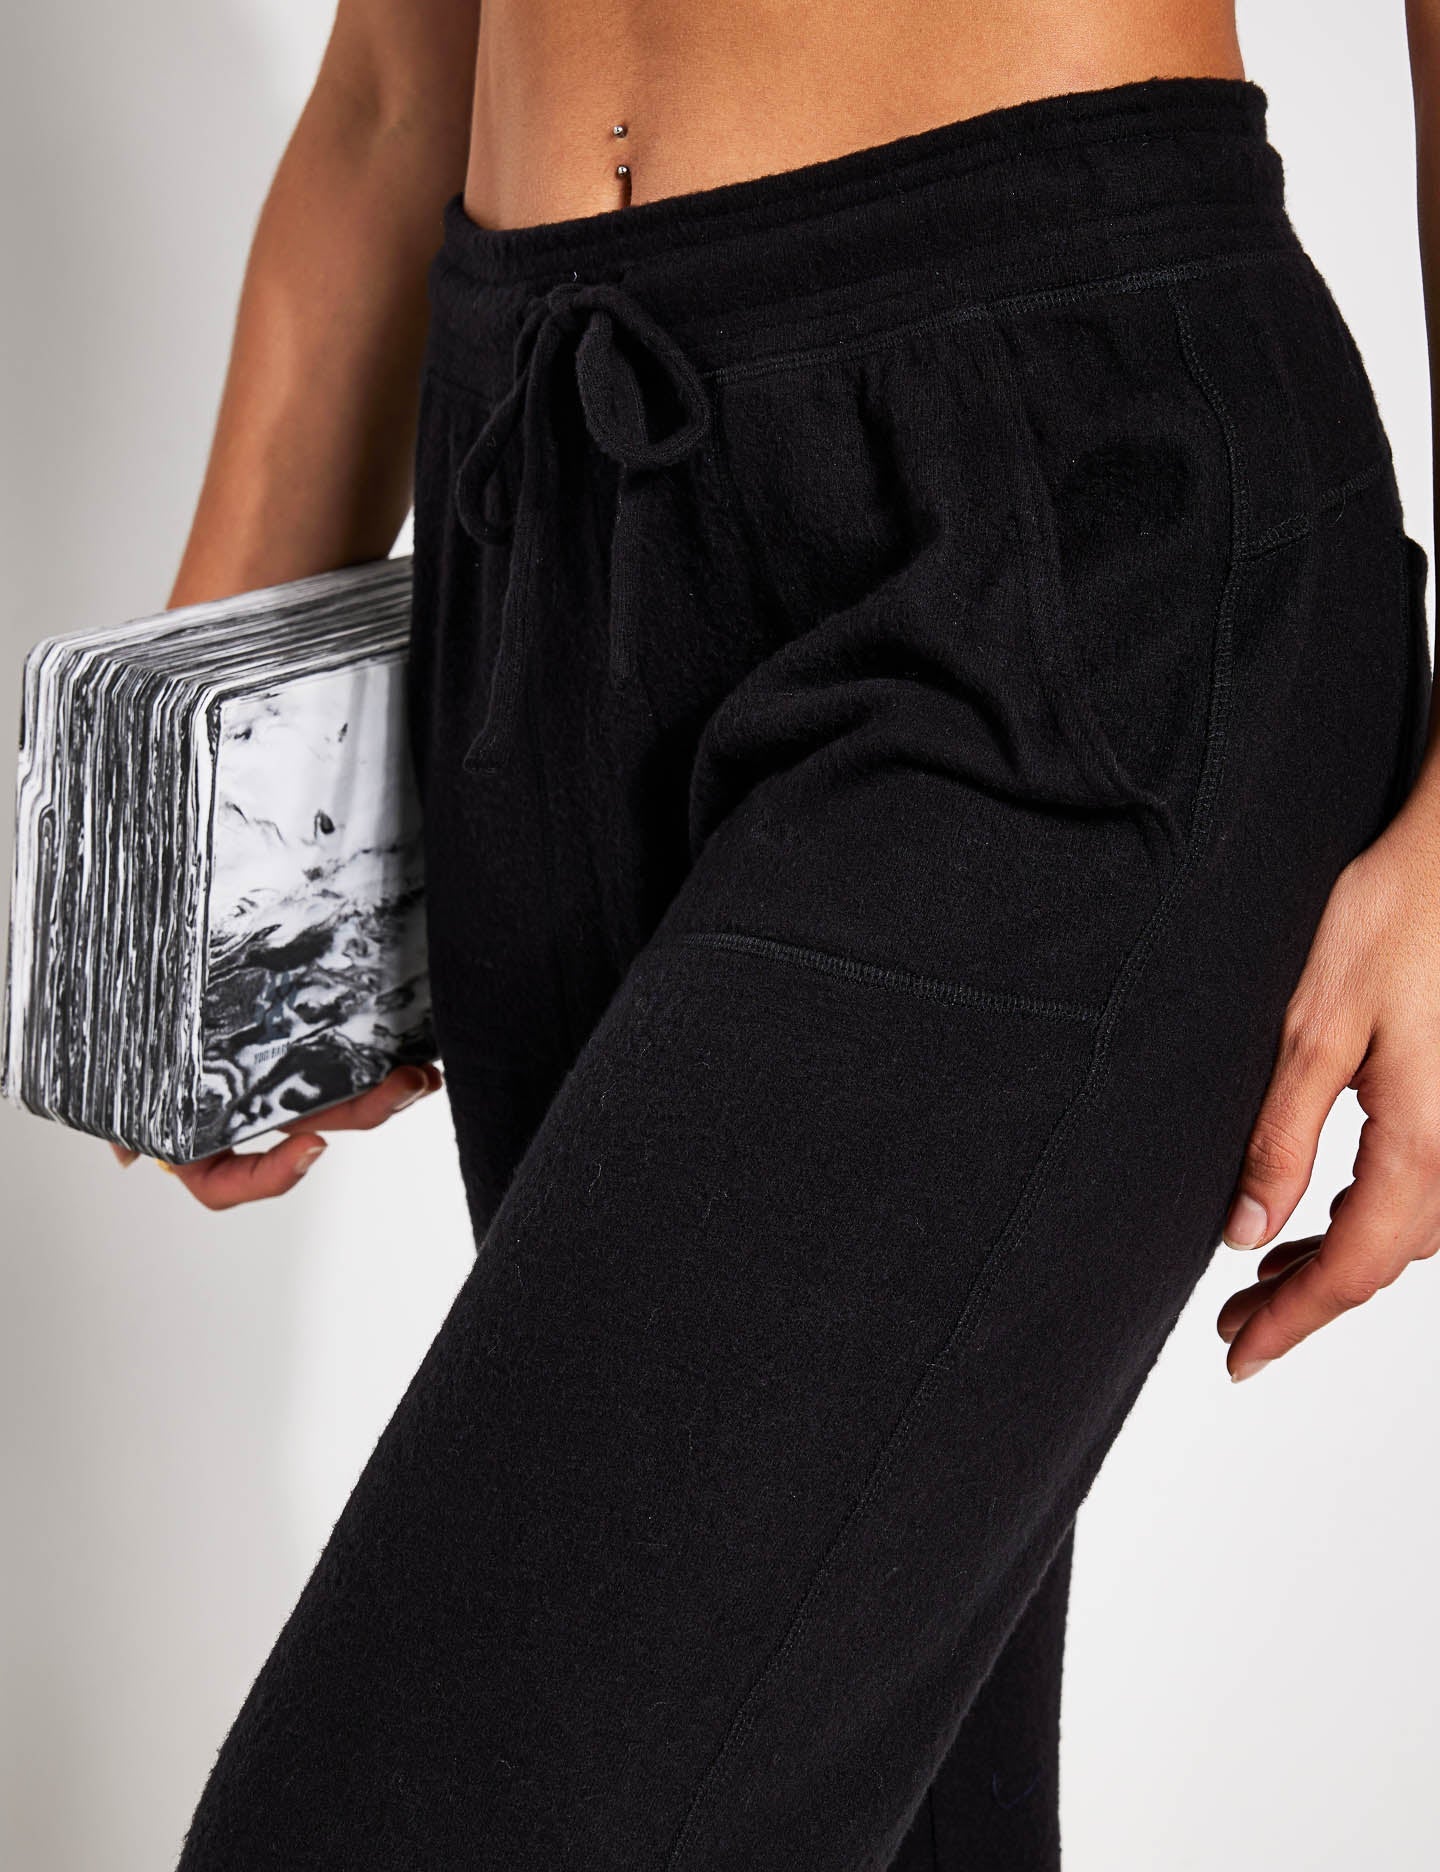  Alo Yoga Unwind Sweatpant - Black - Size S - Performance Fabric